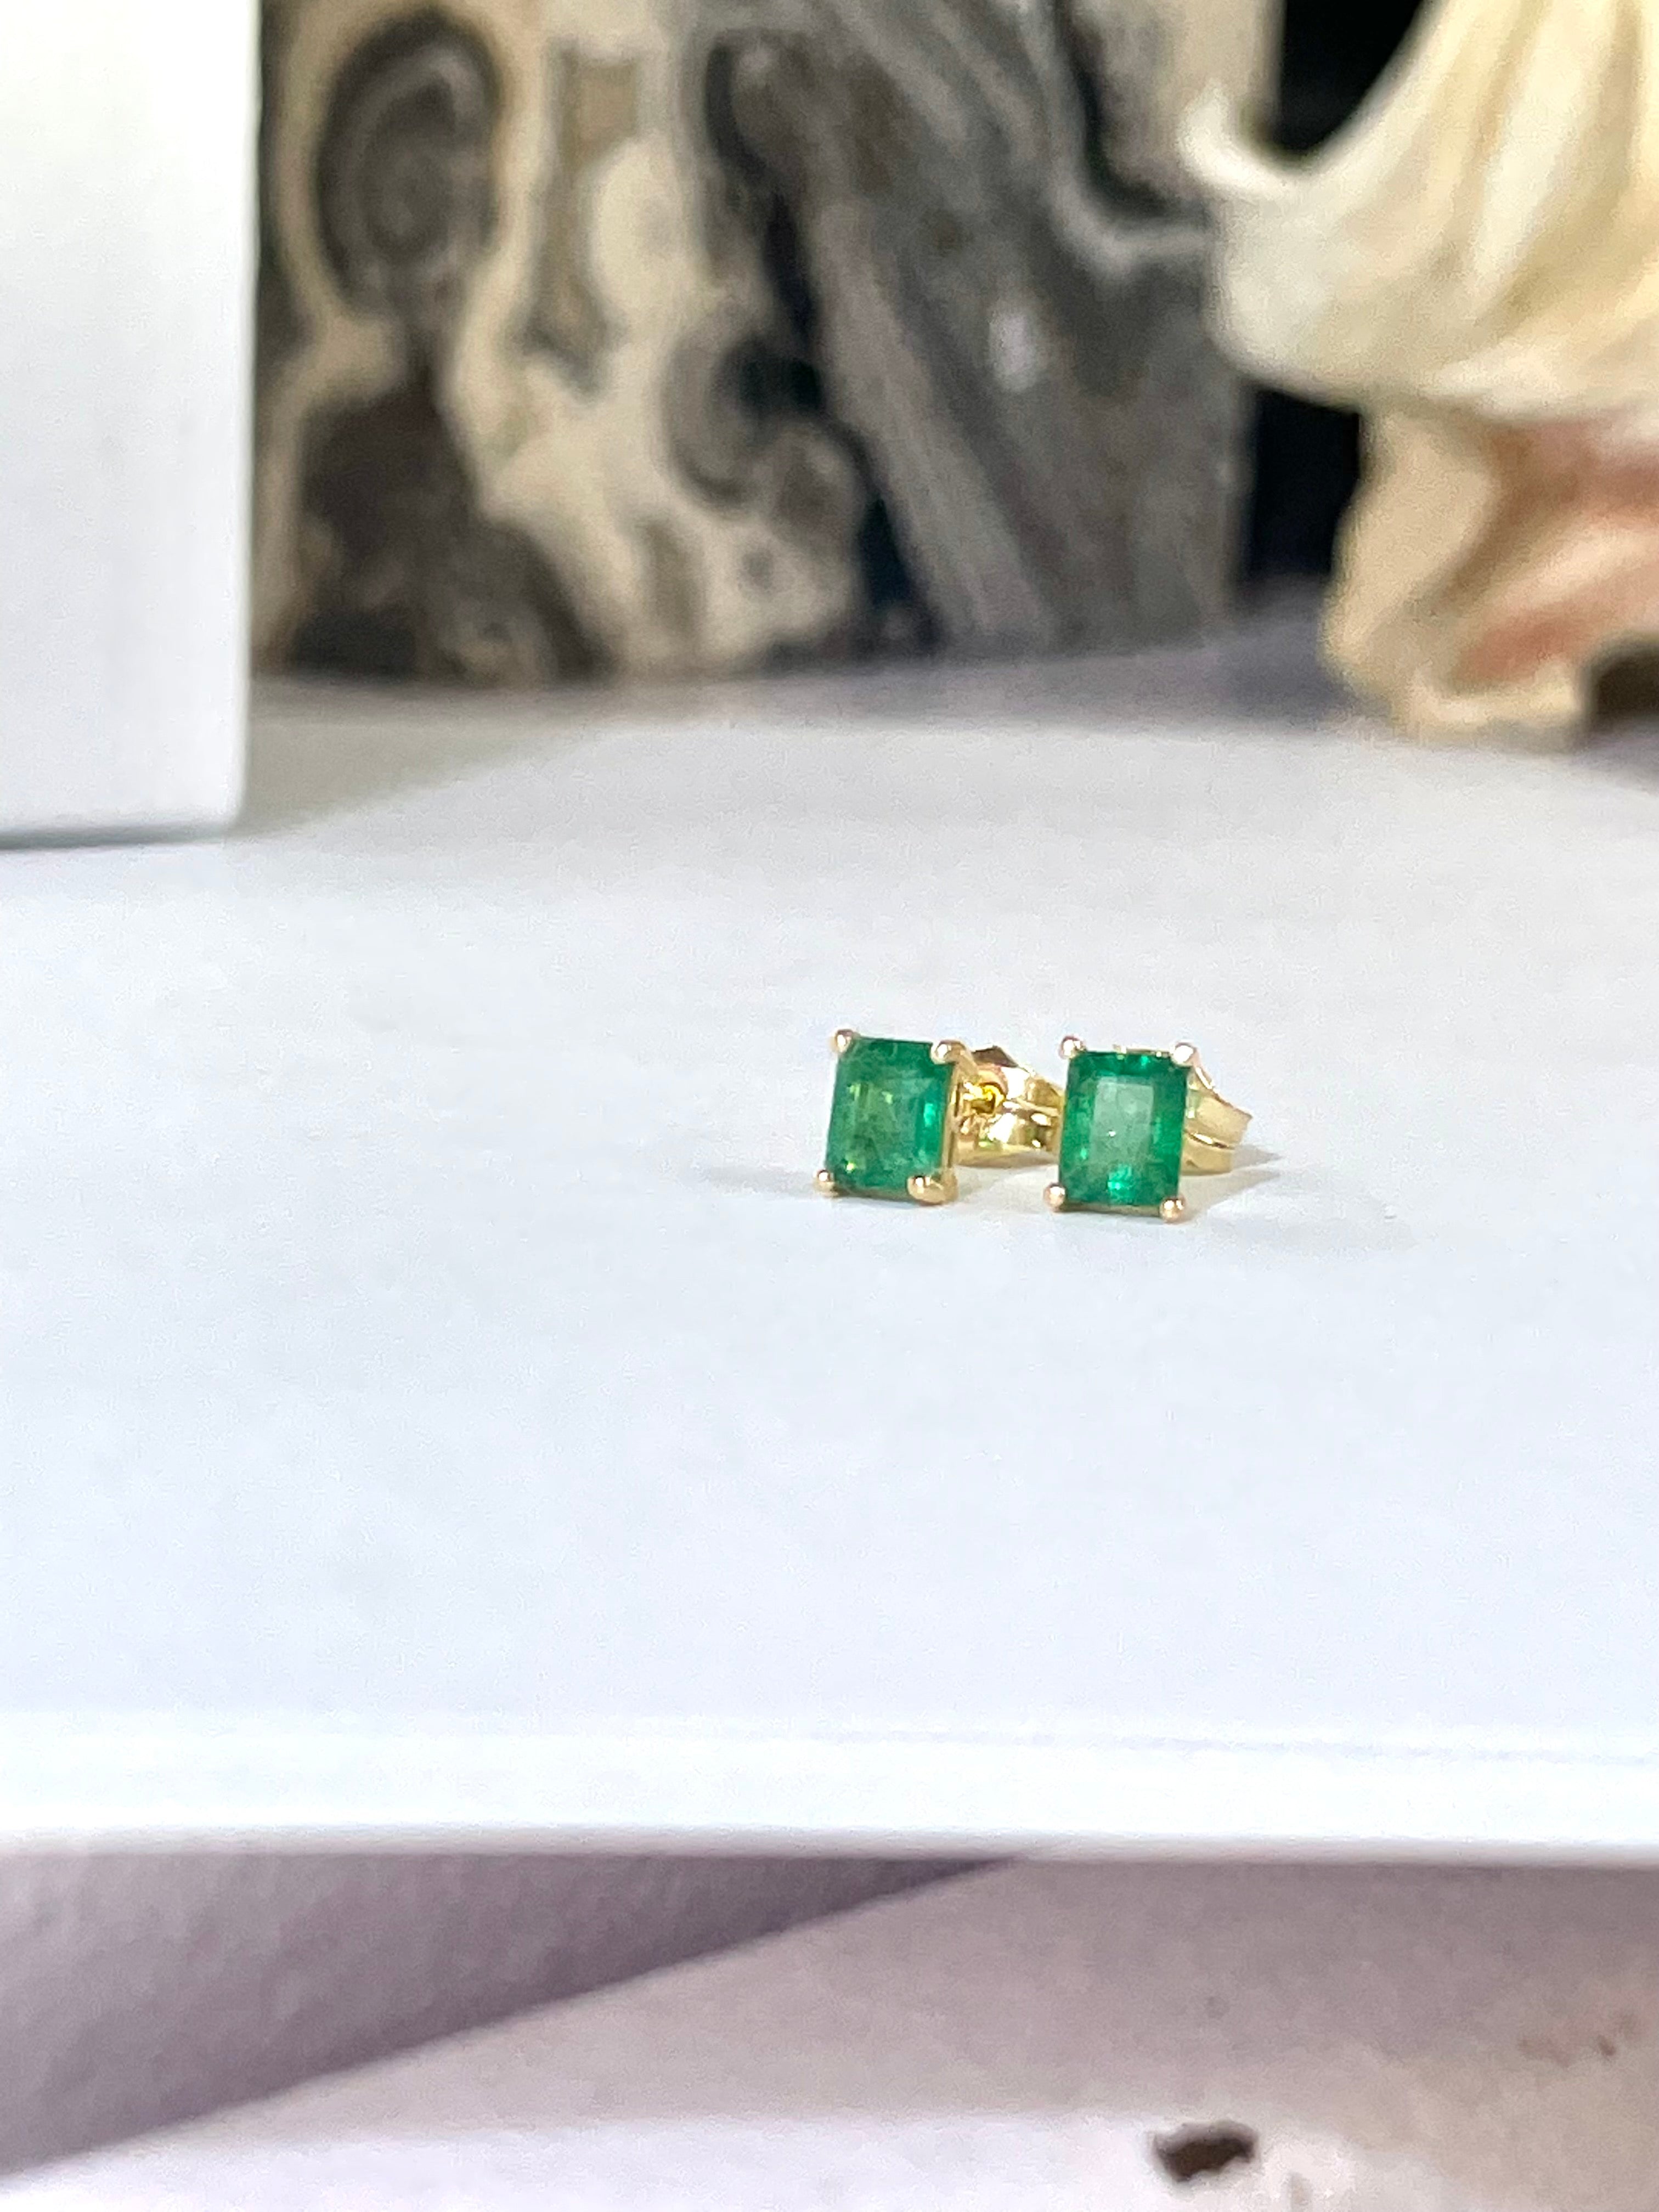 1CT Brazilian Emerald 18K Yellow Gold Stud Earrings